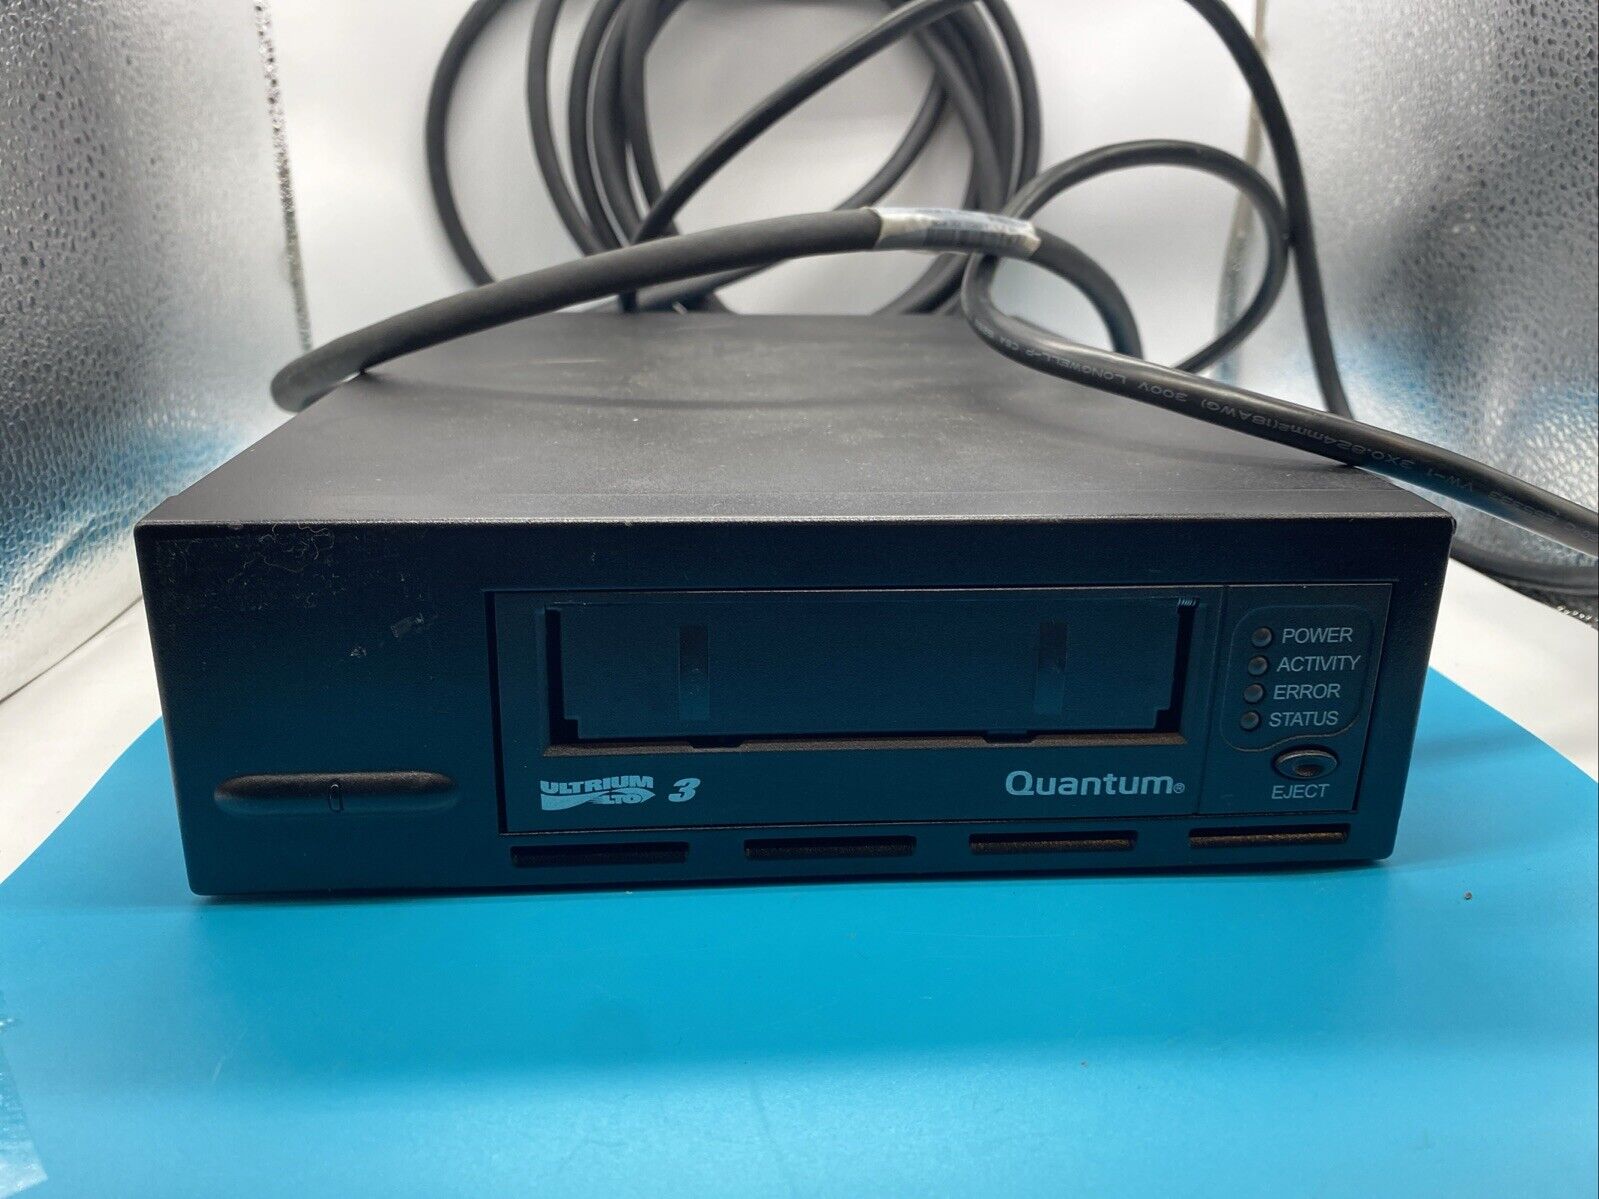 Quantum Ultrium LTO3 400-800GB External HH SCSI Tape Drive TC-L32BX - UNTESTED